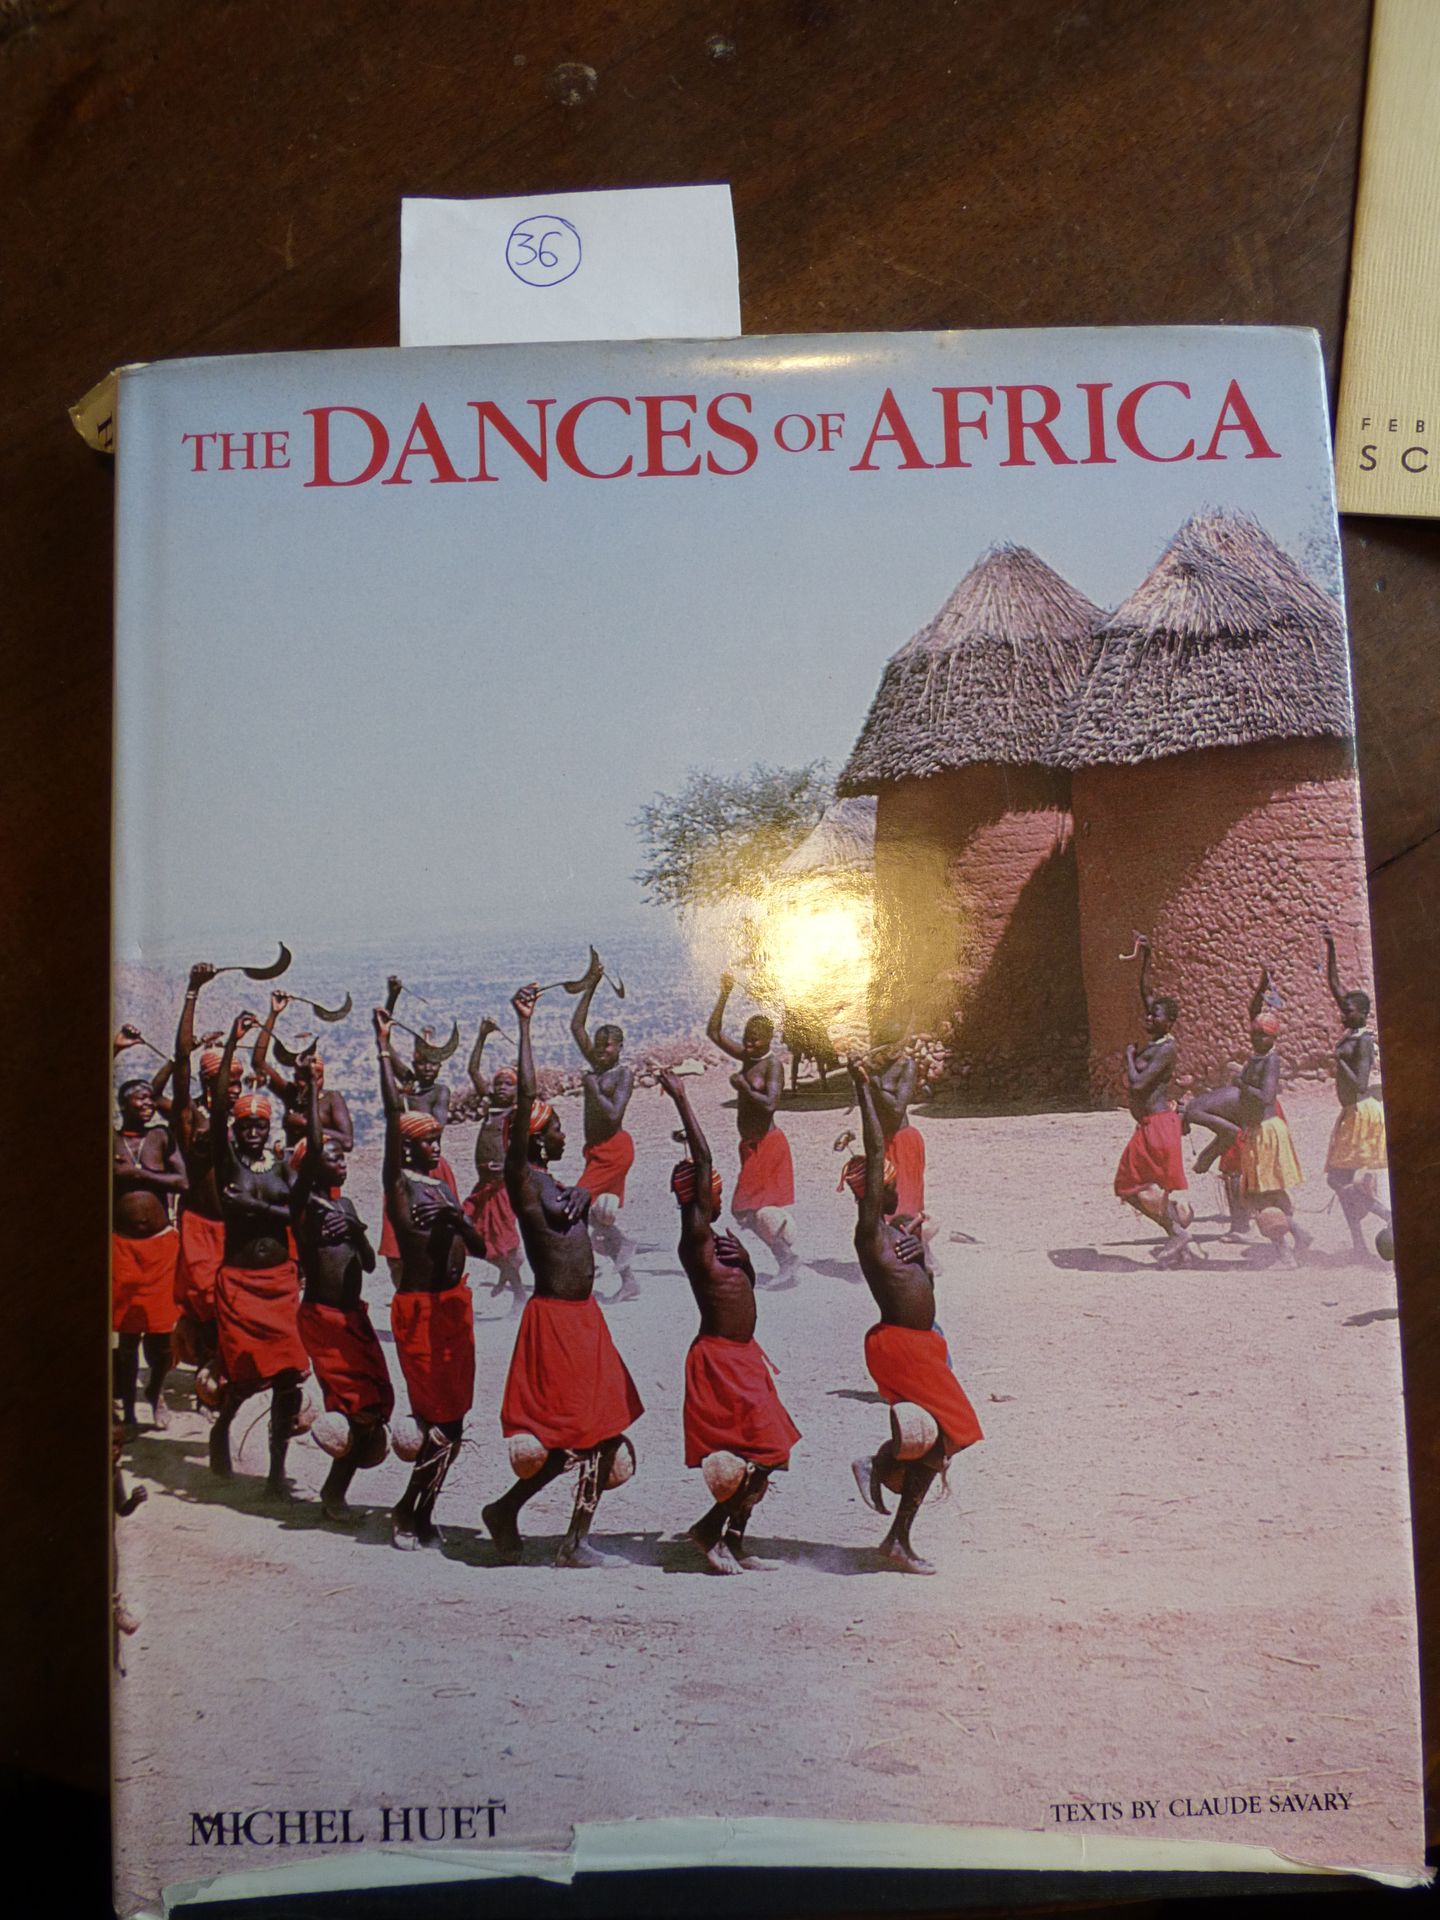 Dances of Africa Michel Huet, Claude Savary, Harry N. Abrams, 1996